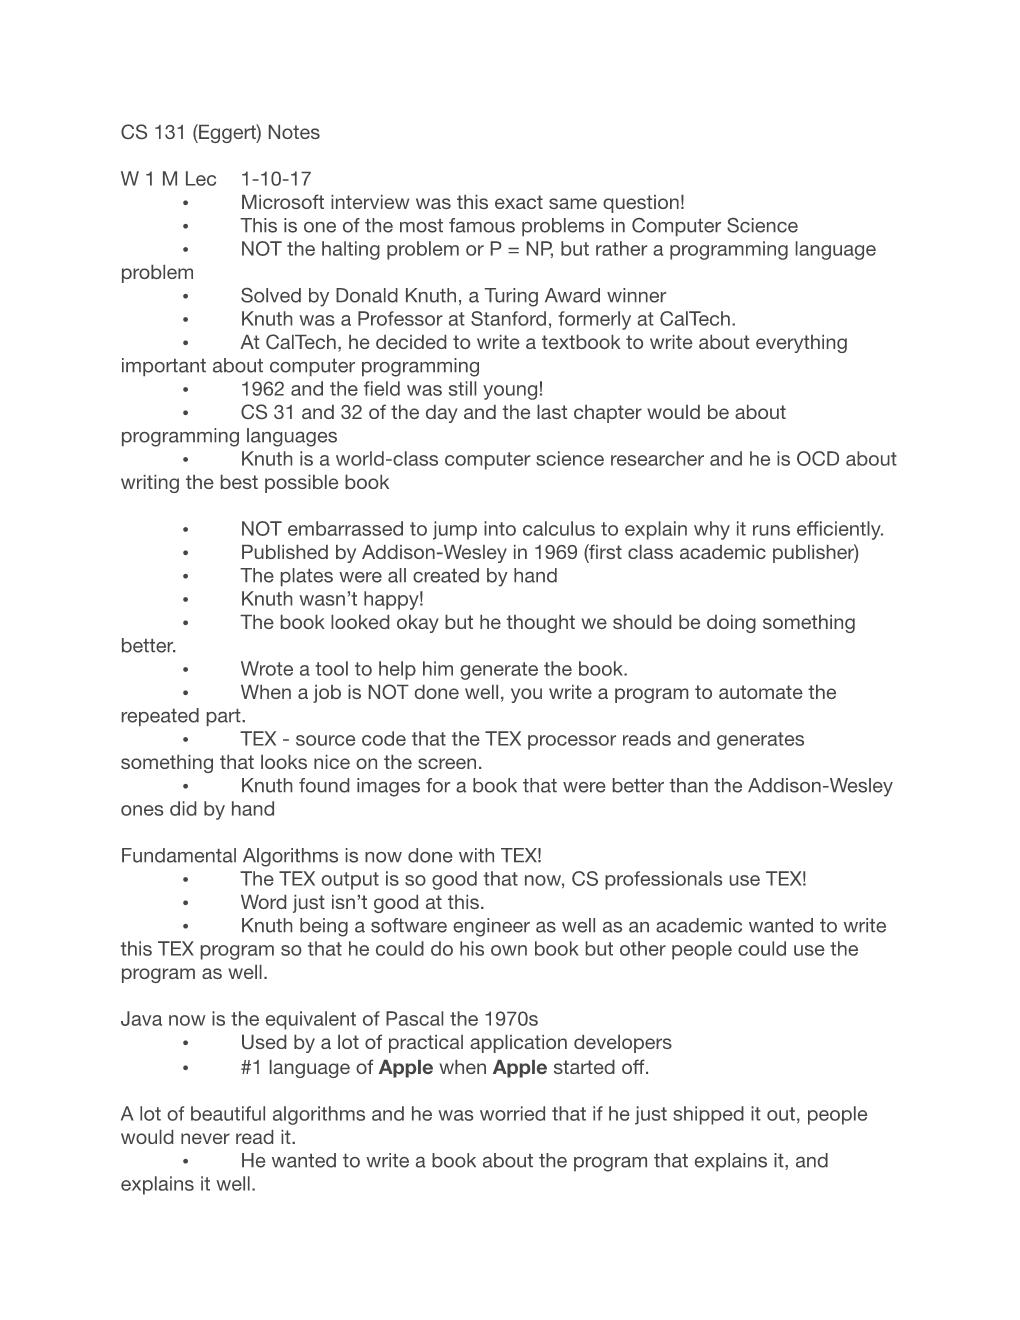 CS 131 (Eggert) Notes W 1 M Lec 1-10-17 Microsoft Interview Was This